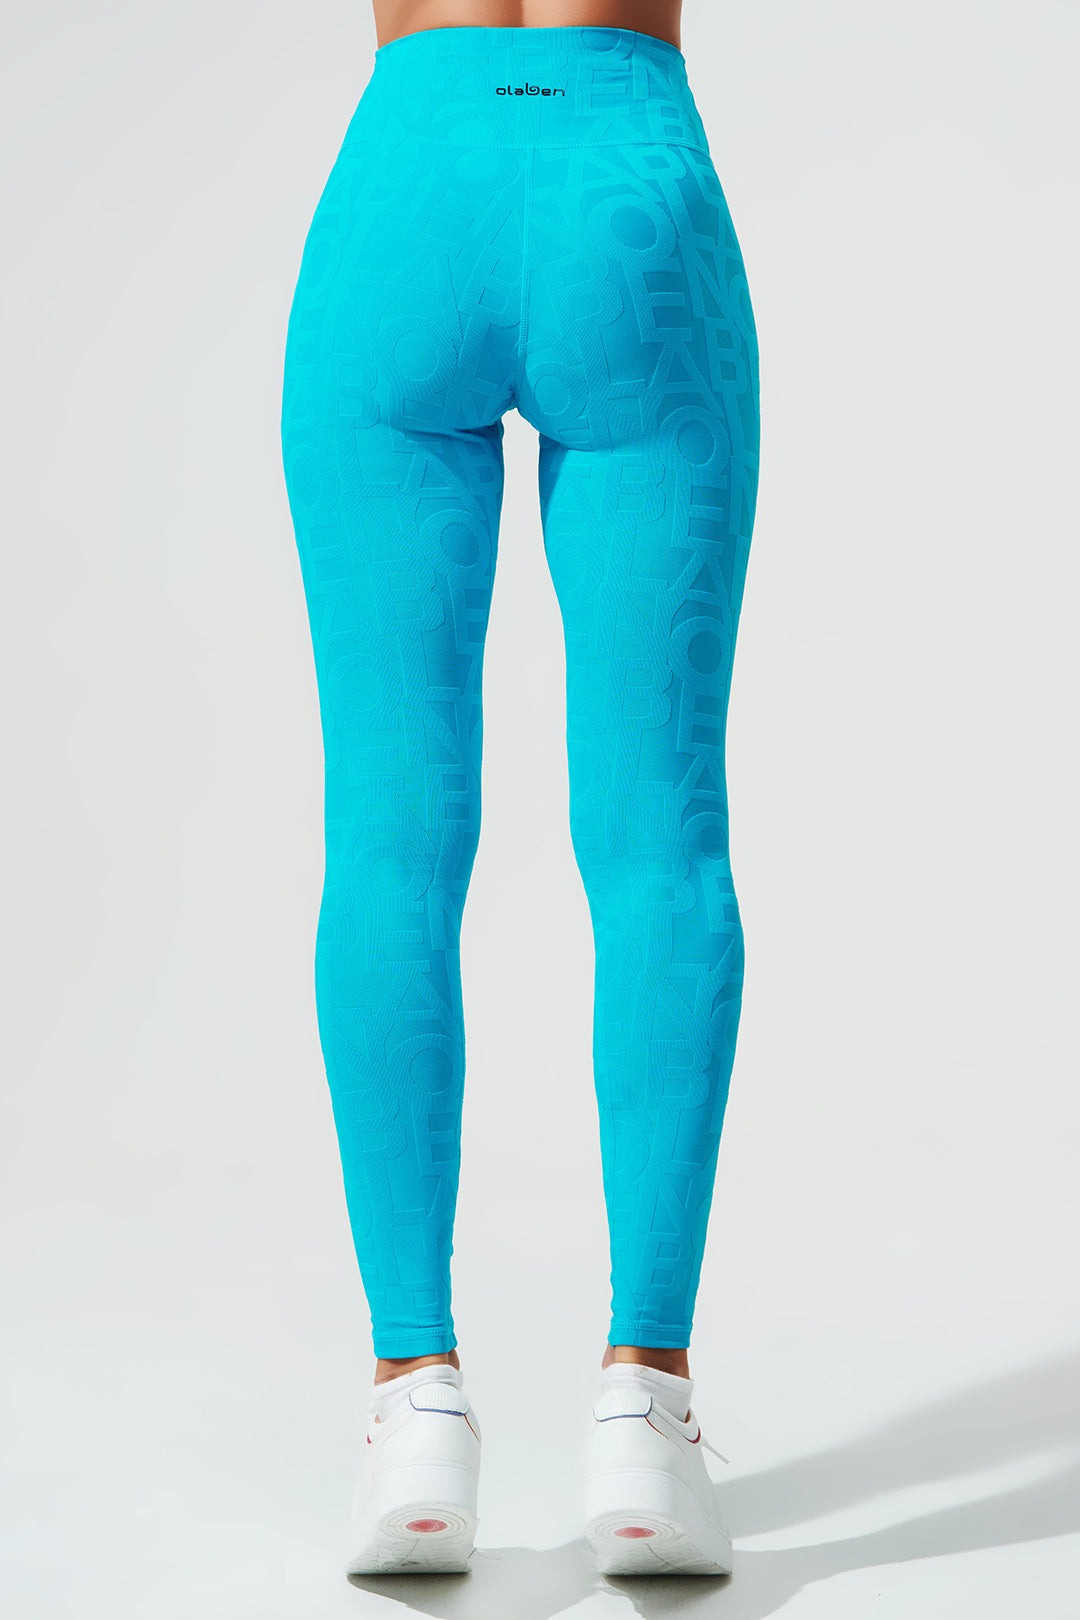 Stylish Dazzle Blue 3D Leggings for Women - OW-0073-WLG-BL - Size 4